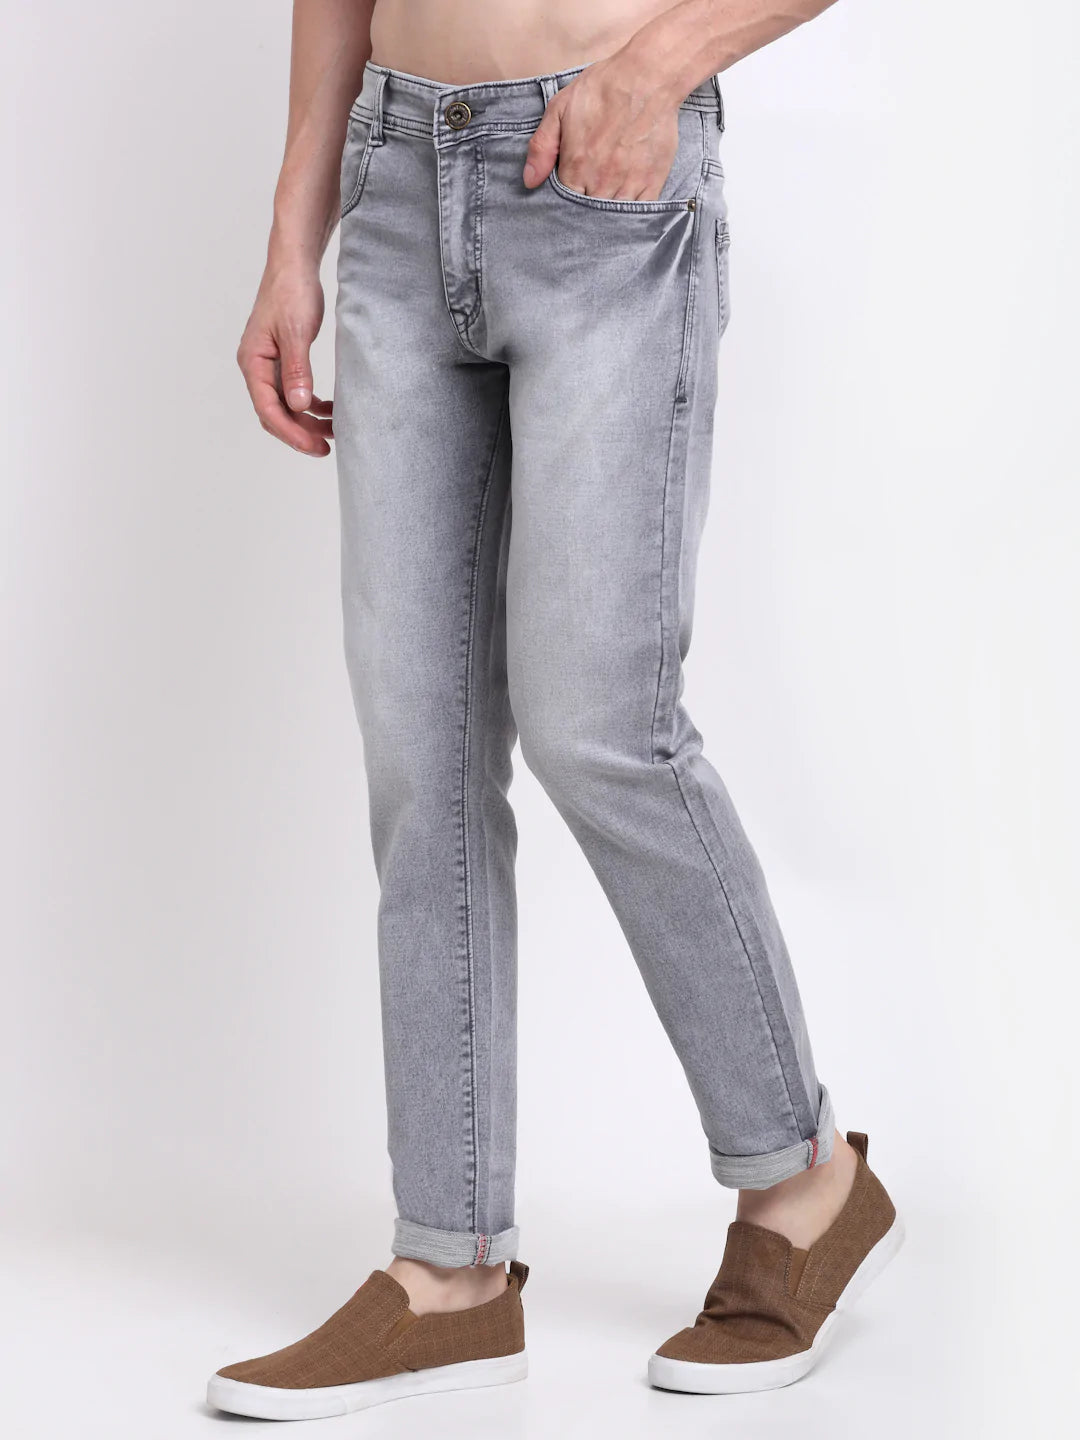 Denim Casual Wear Mens Damage Jeans, Waist Size: 28-36 Inch at Rs 390/piece  in Muzaffarnagar